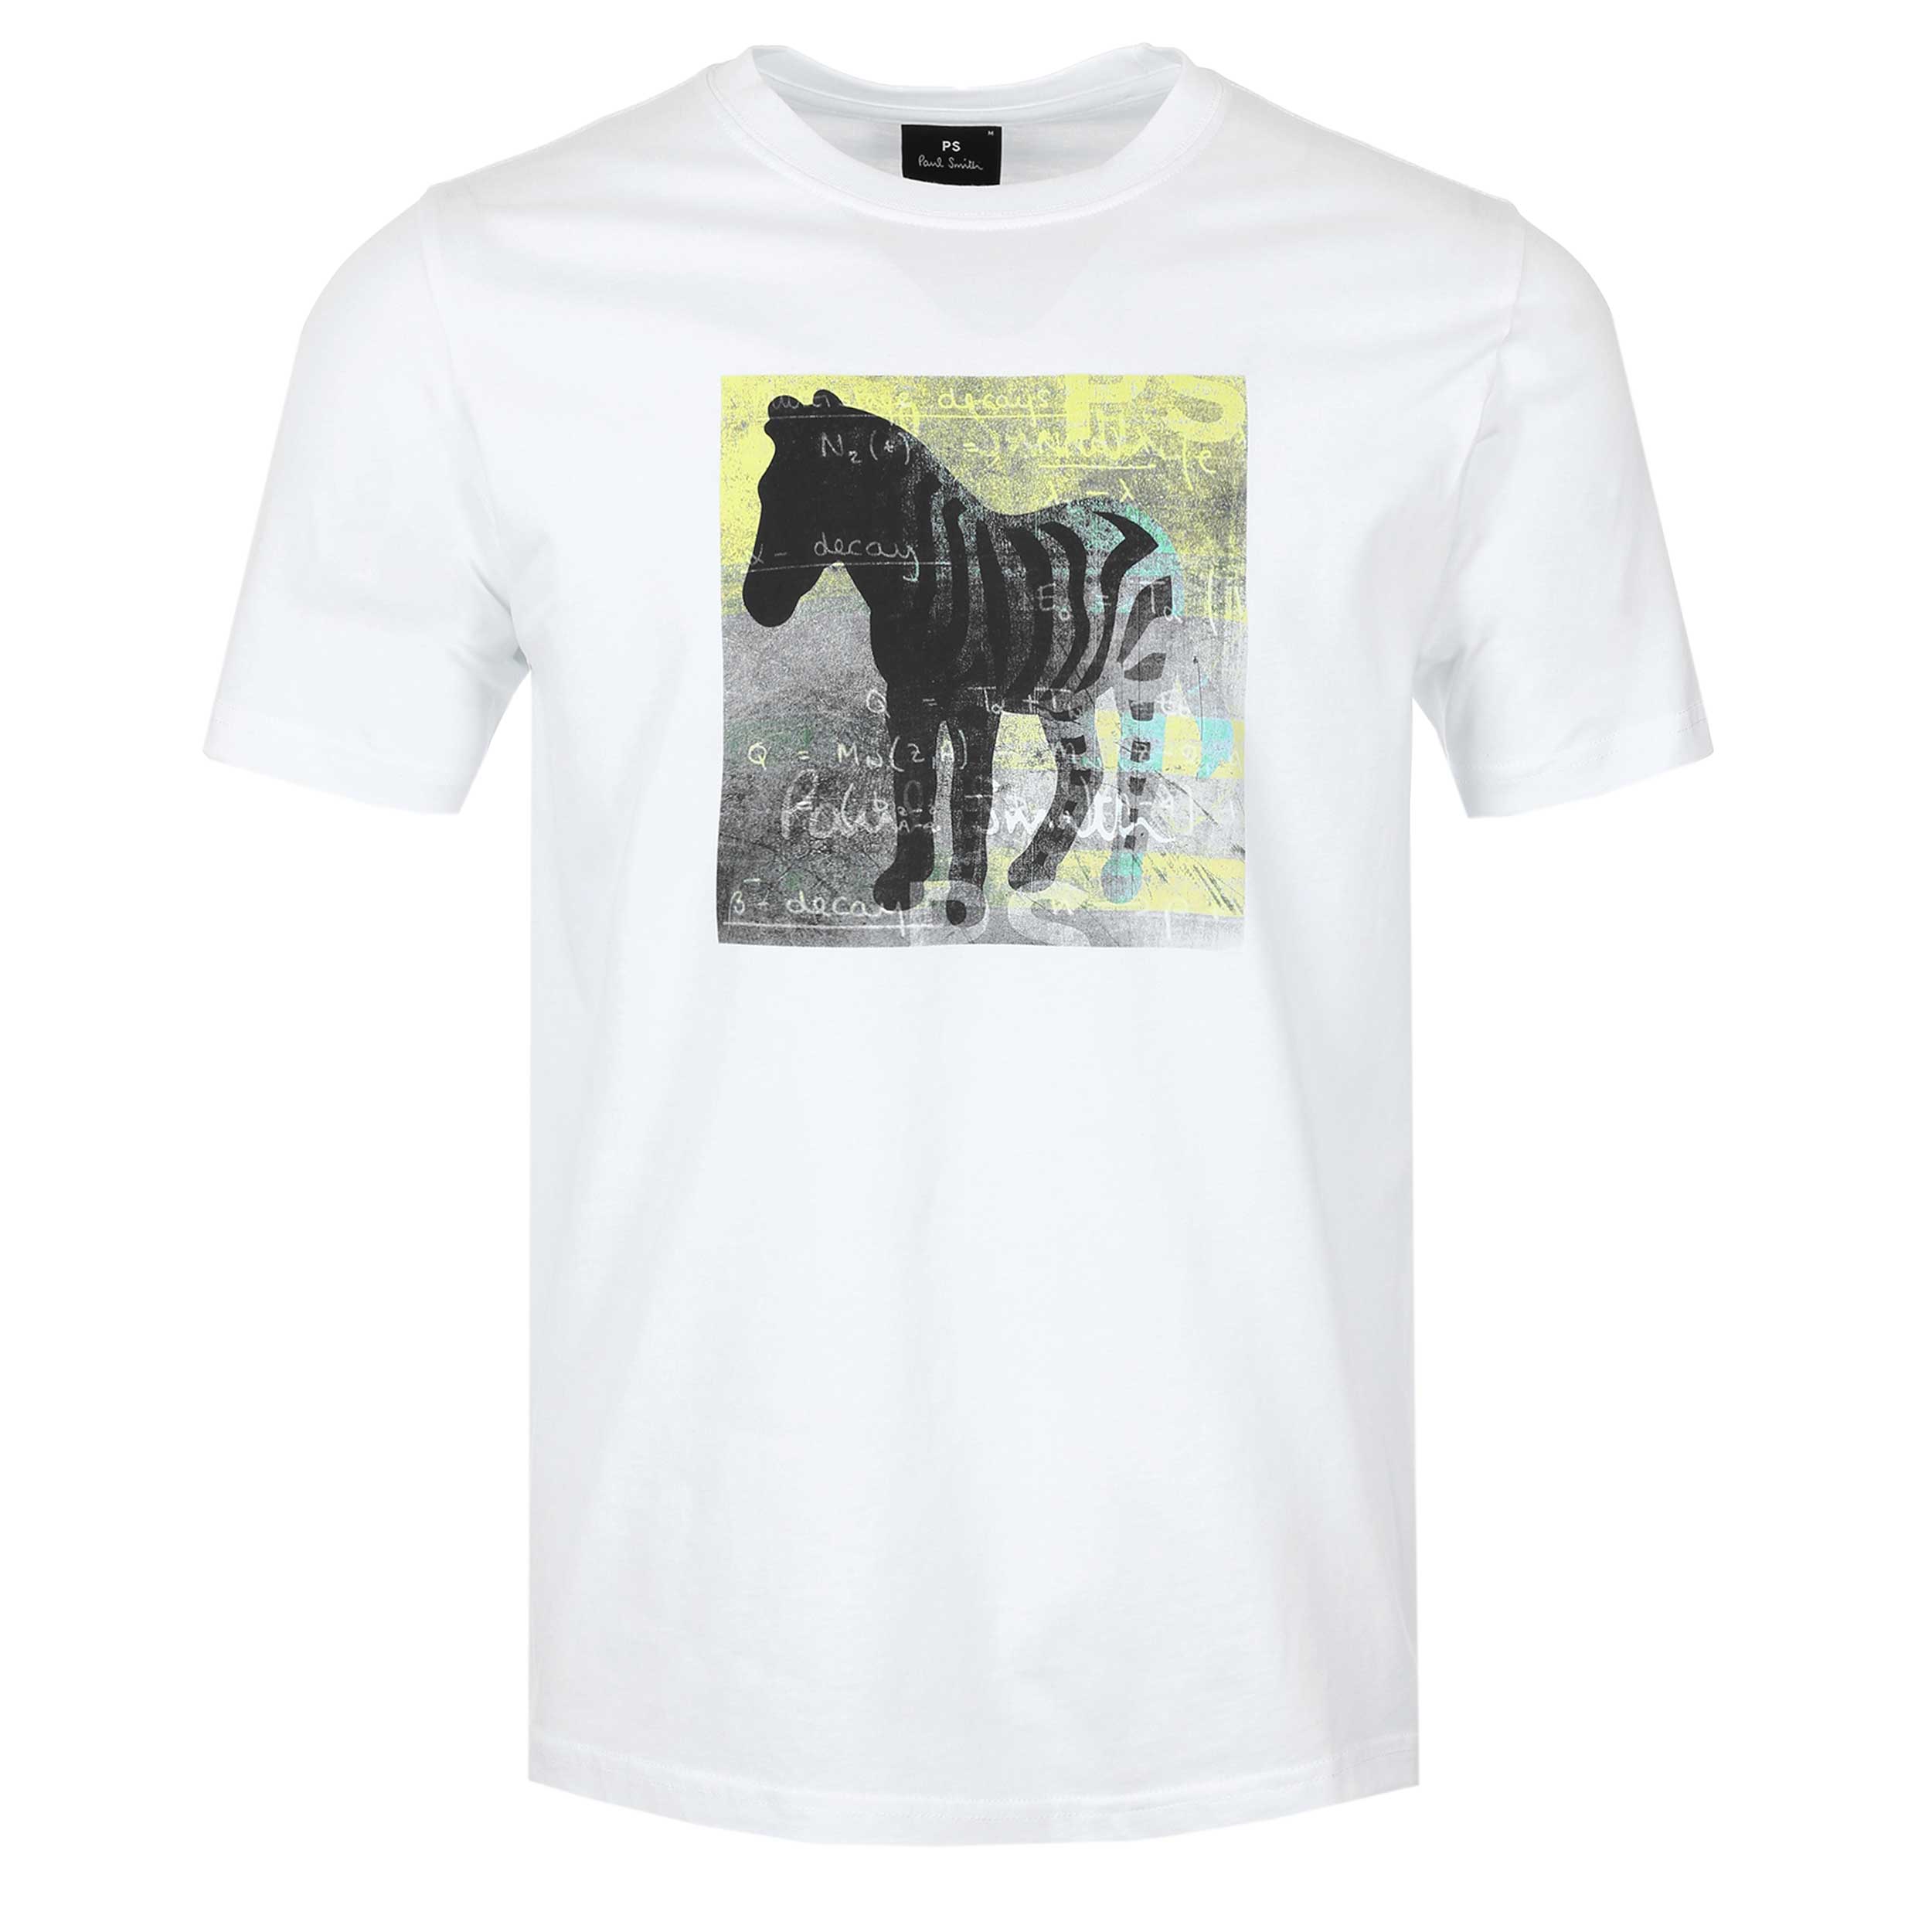 Paul Smith Zebra Square T Shirt in White